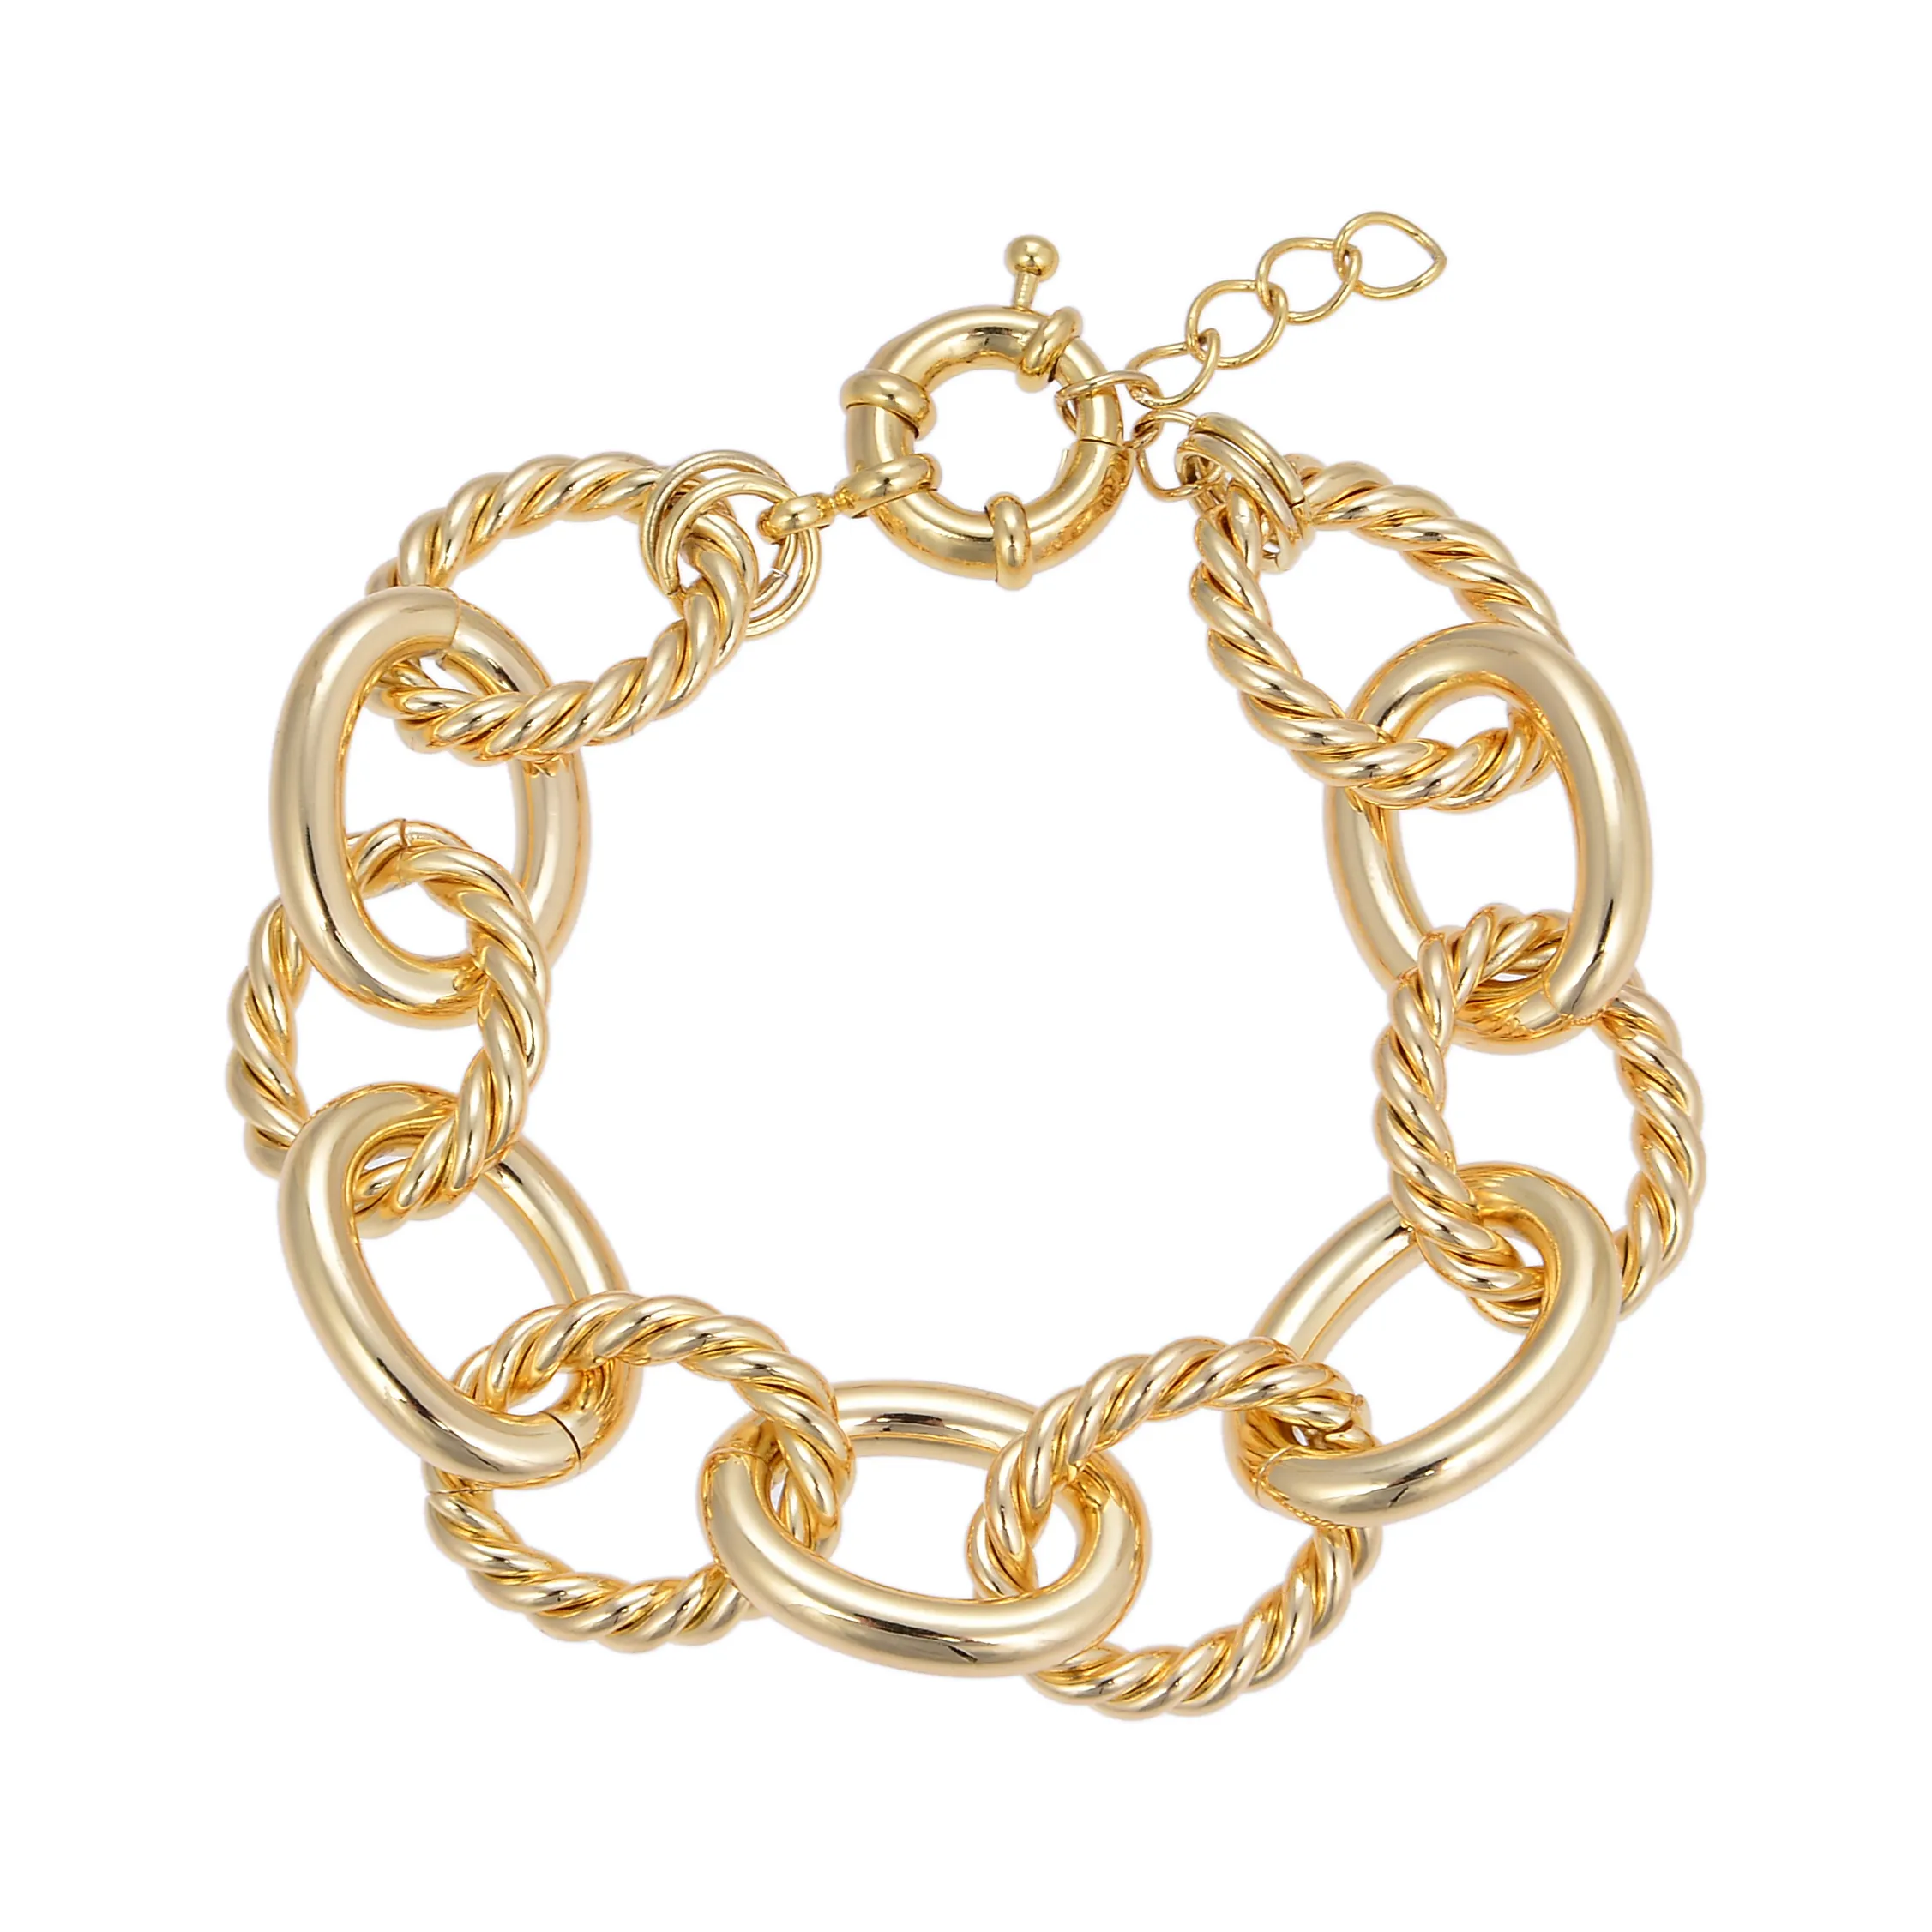 Designer Bracelets Fashion Jewelry 18K Gold Twist Bracelet Gold Adjustable Twisted Bracelet